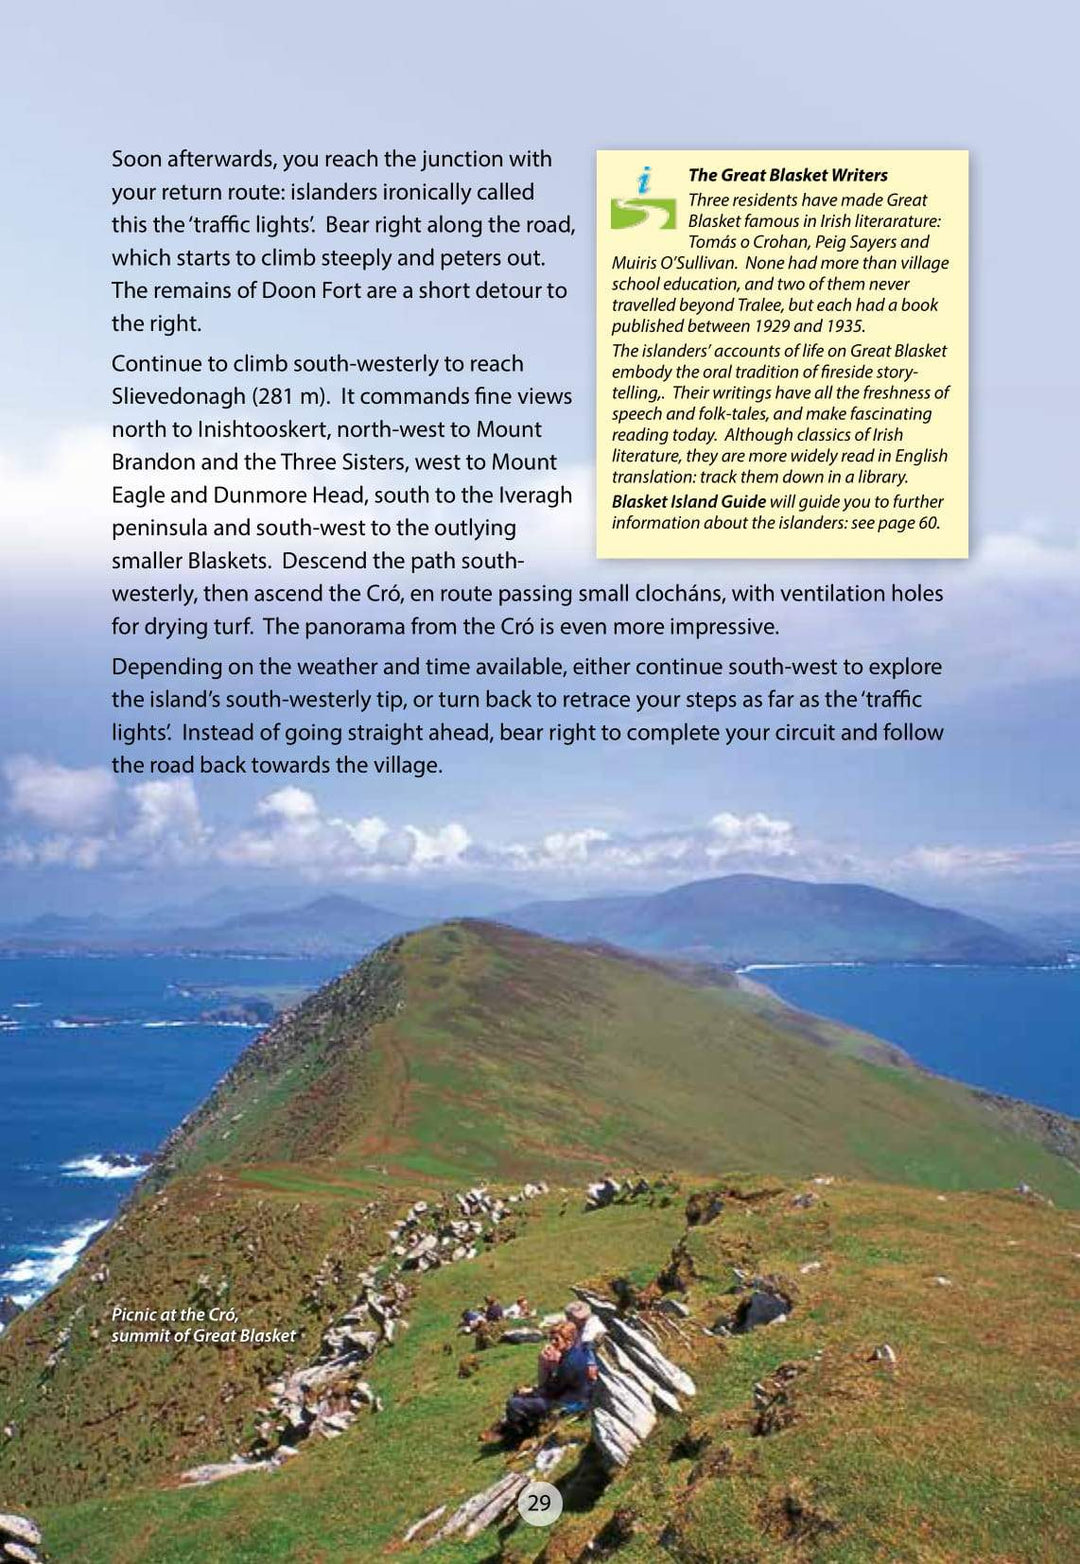 Guide de randonnées (en anglais) - Dingle Way (Irlande) | Rucksack Readers guide de randonnée Rucksack Readers 